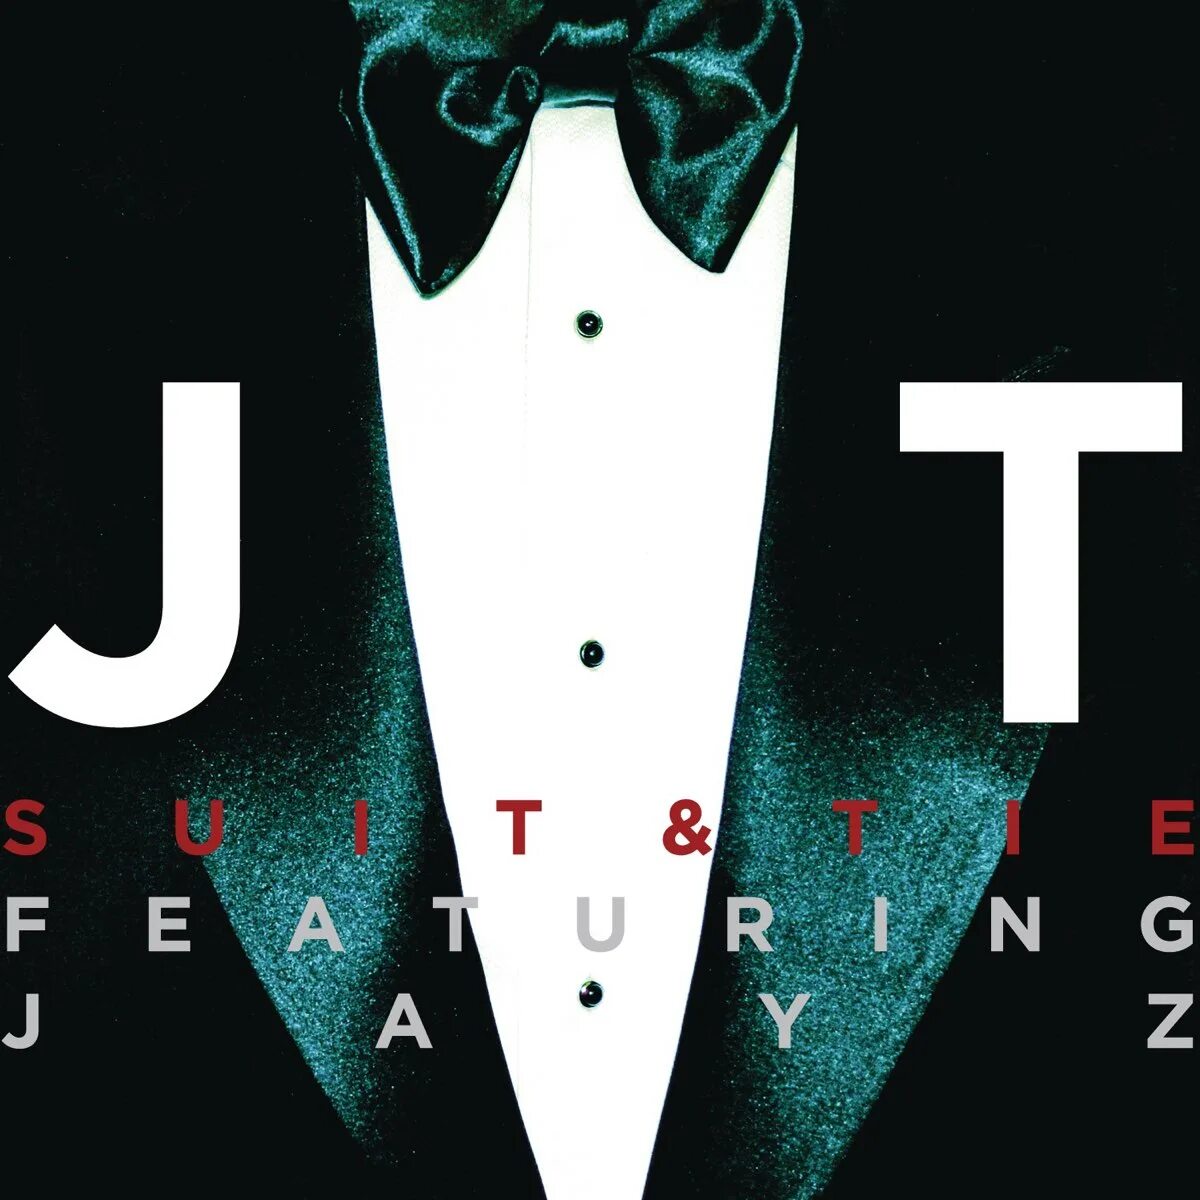 Suit&Tie костюм Джастина Тимберлейка. Timberlake обложка. Джастин Тимберлейк обложки. Джастин Тимберлейк обложки альбомов. Обложки z